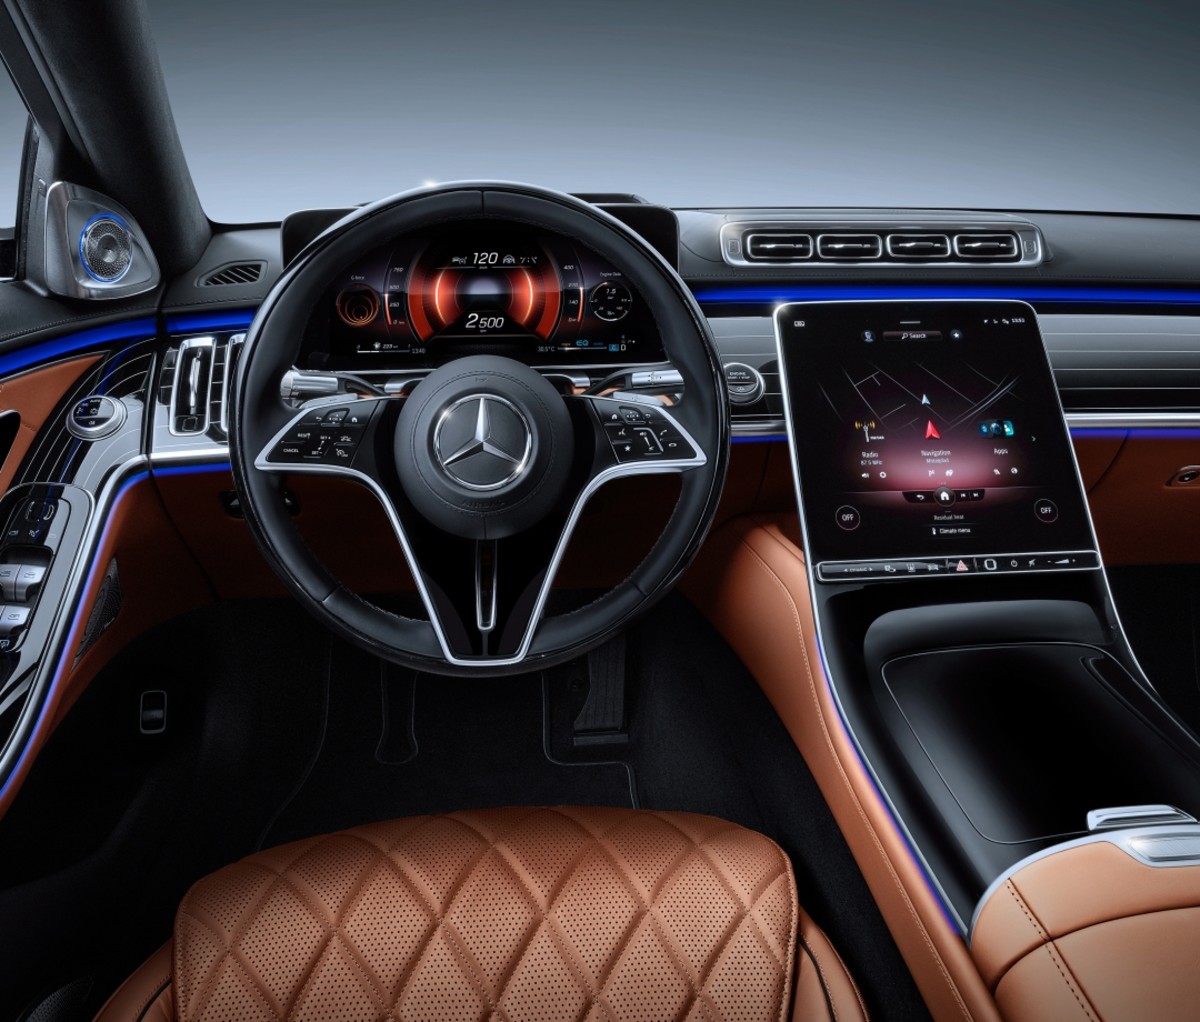 The steering wheel and digital gauge cluster on the Mercedes-Benz S-Class sedan